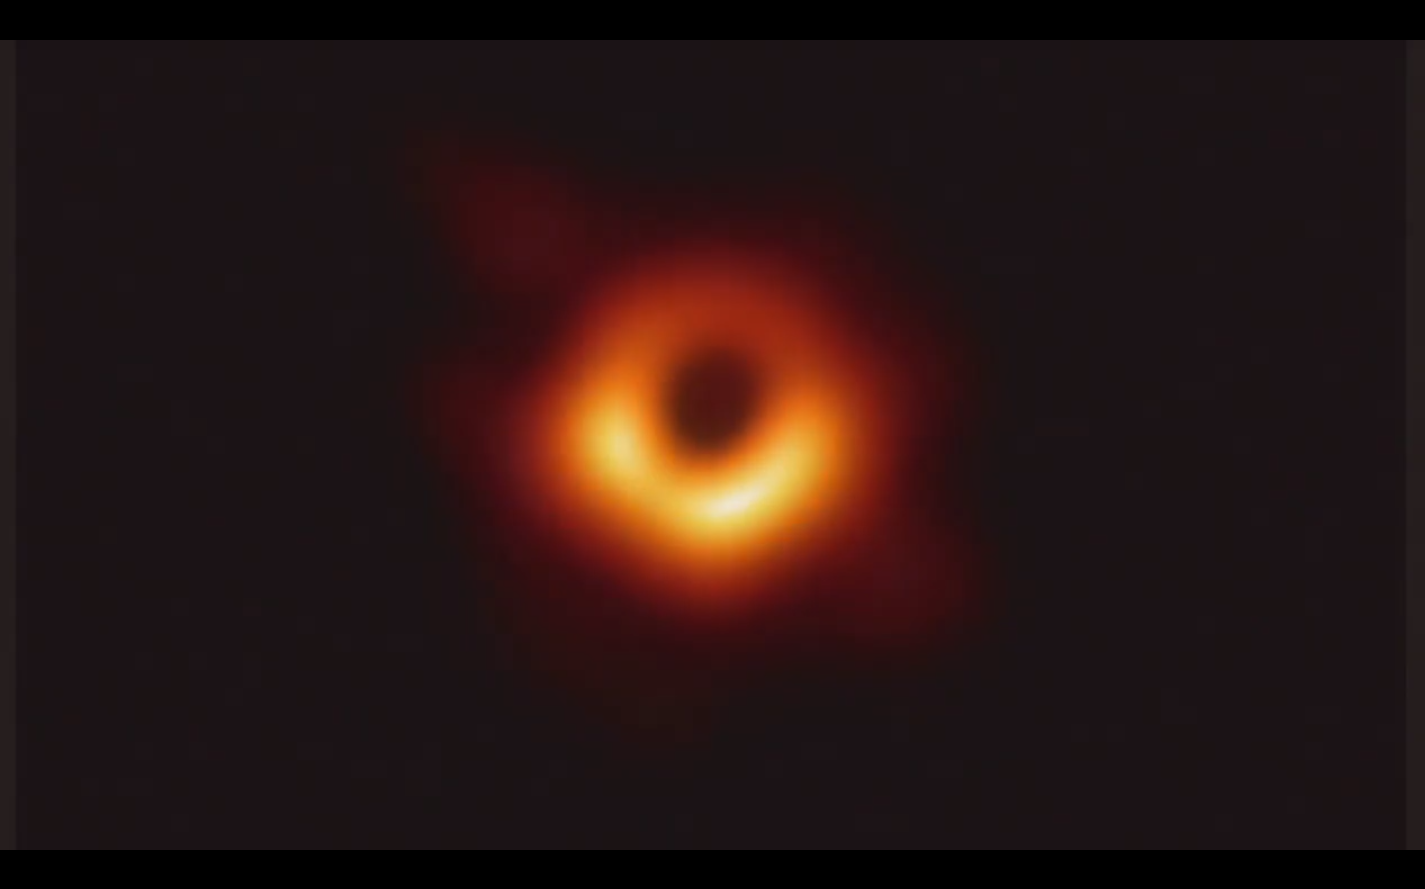 Super-massive black hole